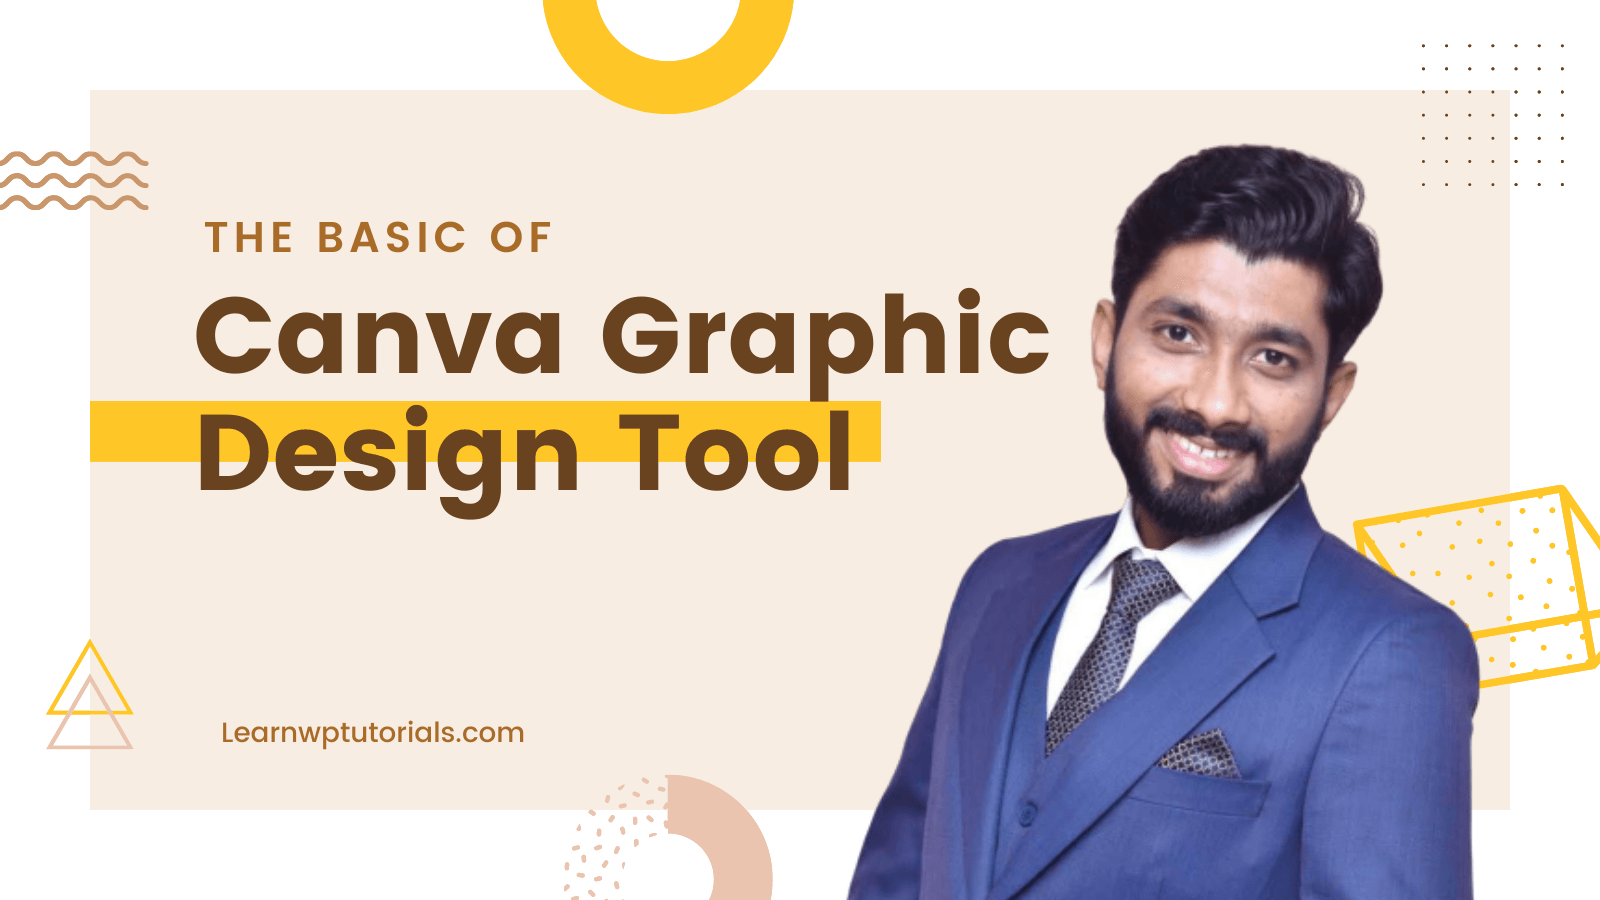 Canva Graphic Design Tool Twitter Post